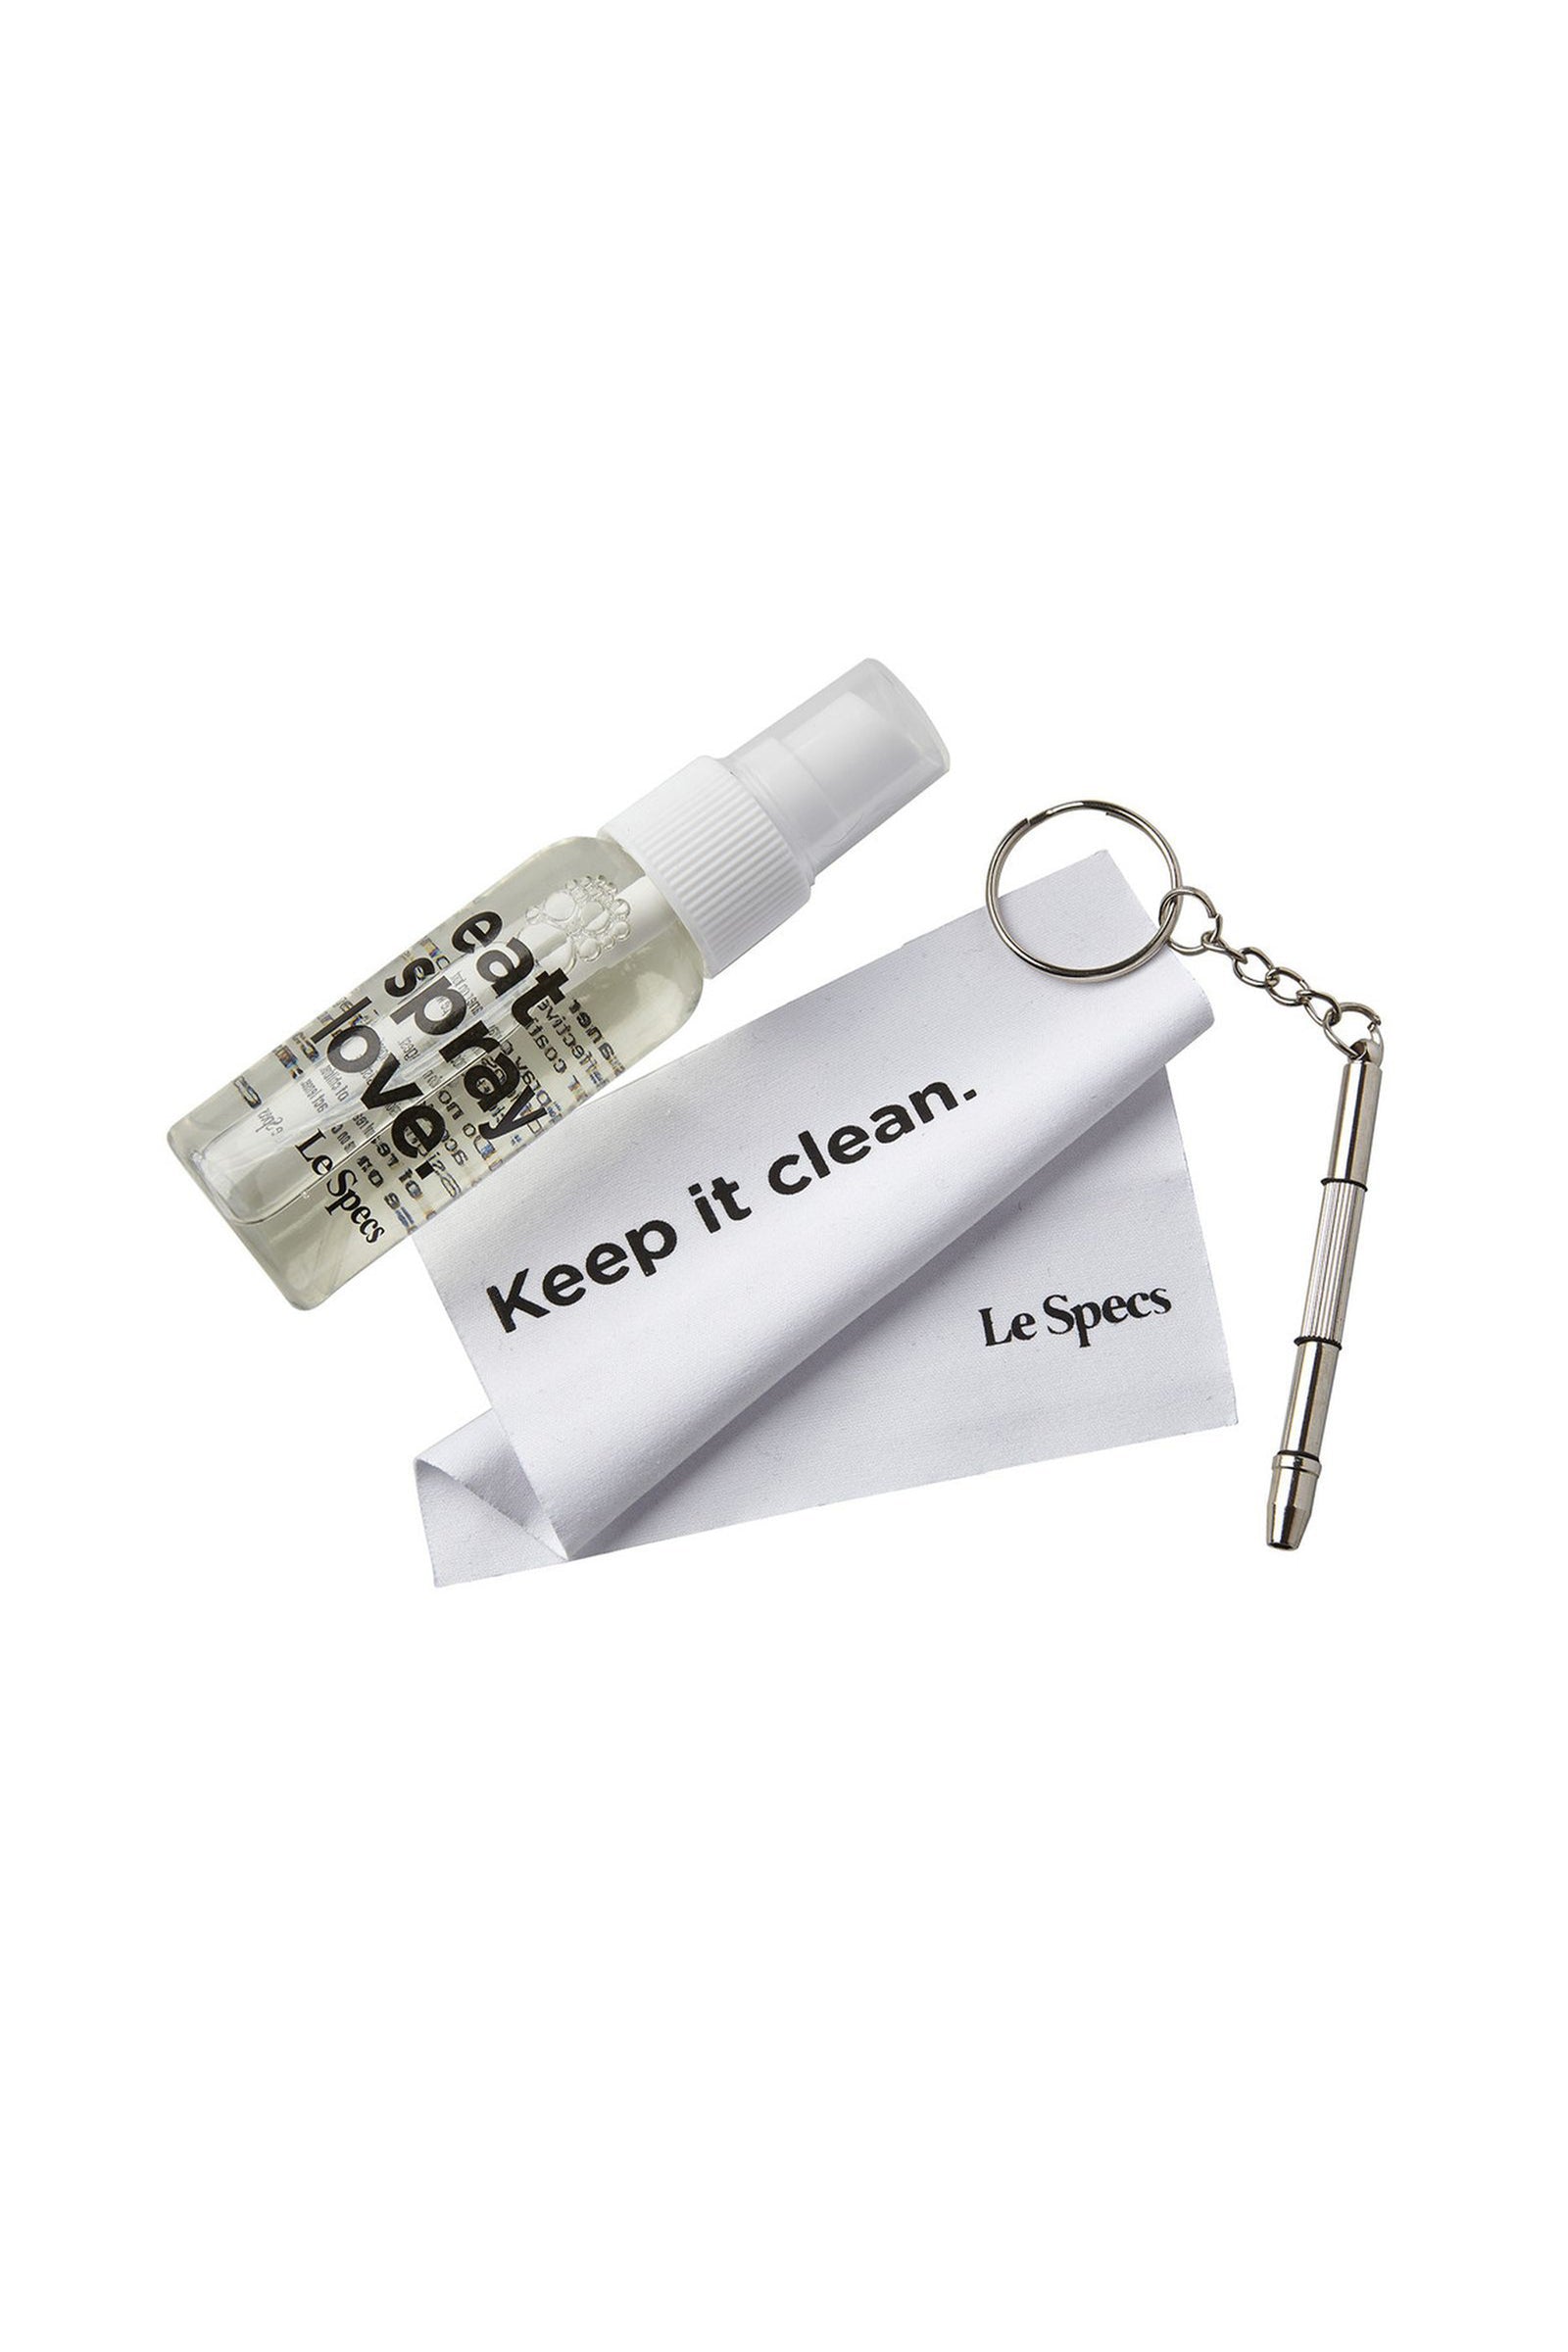 Le Specs Keep It Clean Kit - RUM Amsterdam